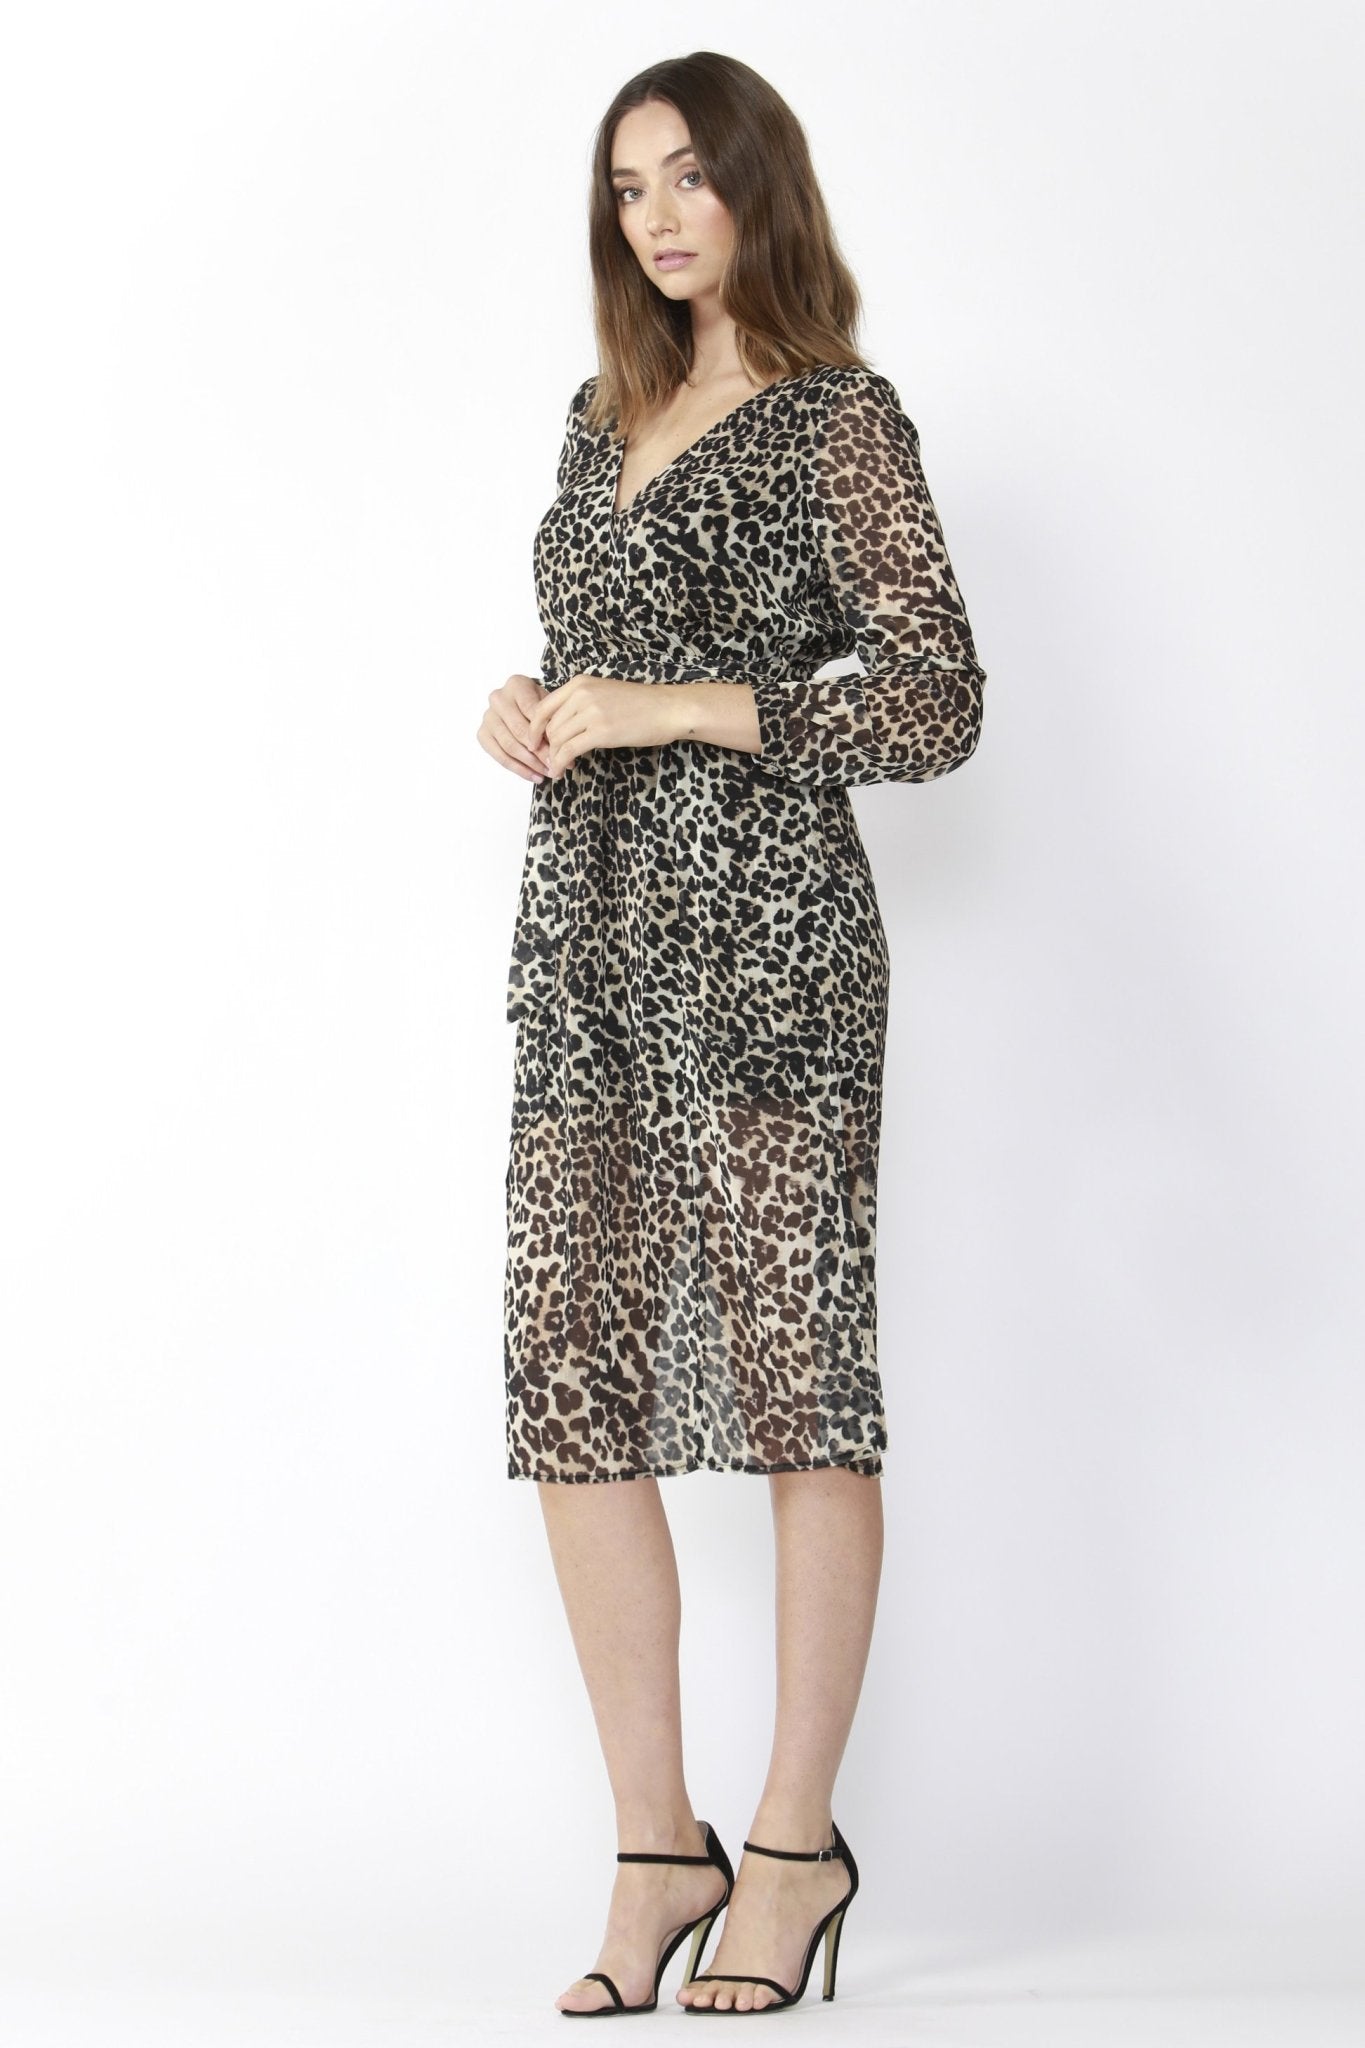 Fate + Becker On The Run Dress in Leopard Print - Hey Sara